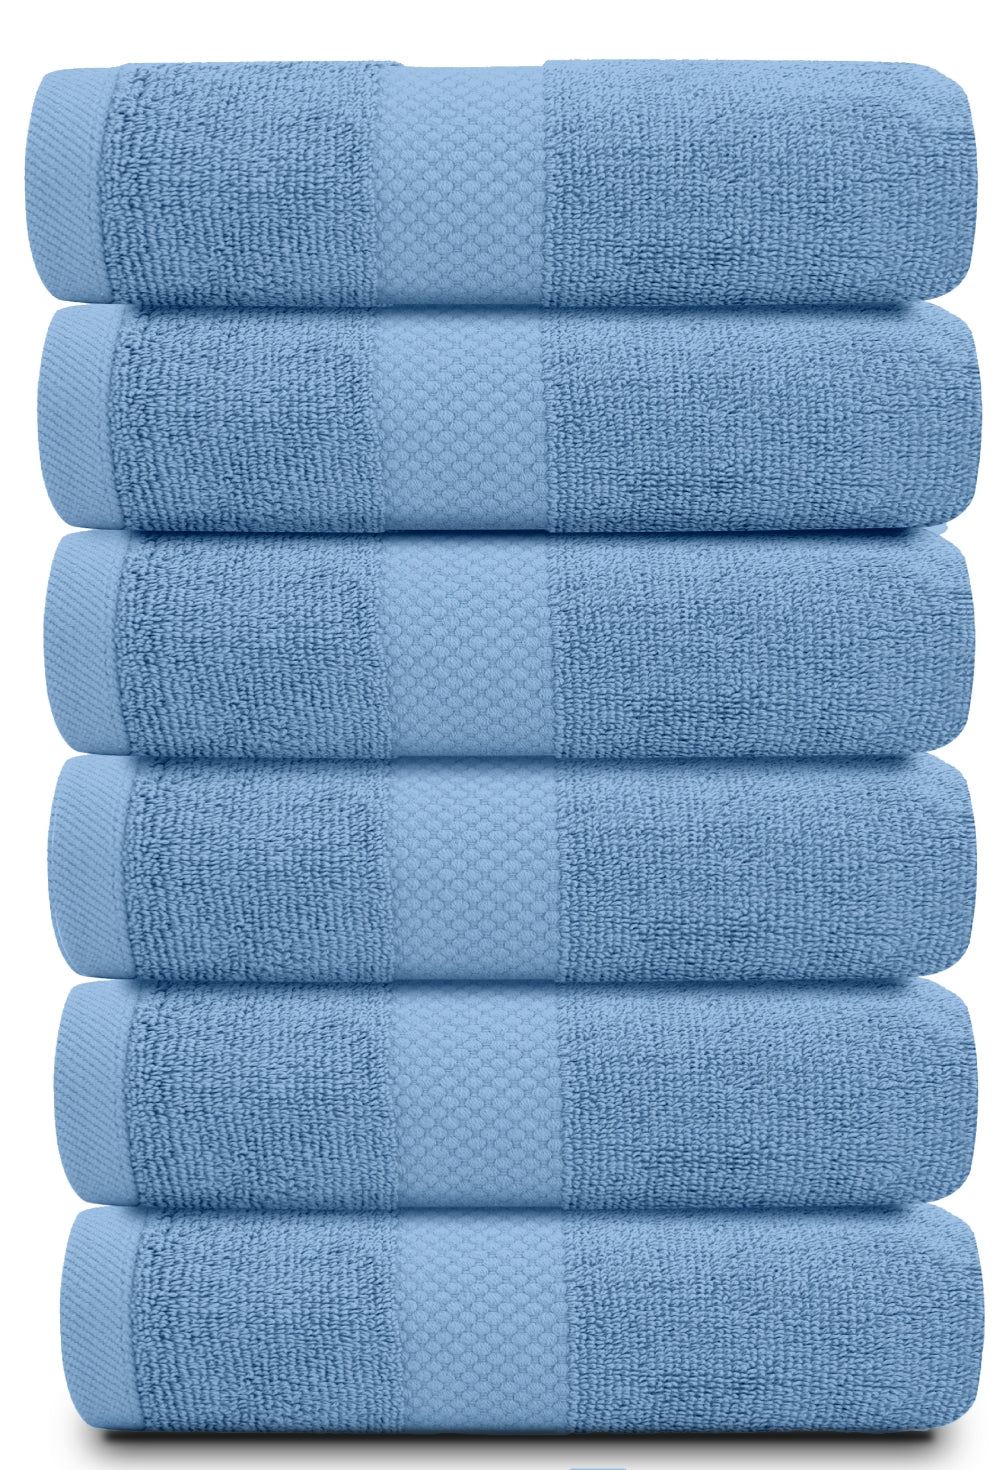 Texrise® Laguna Series 16 x 30 in. Cotton Luxury Hand Towels – 12